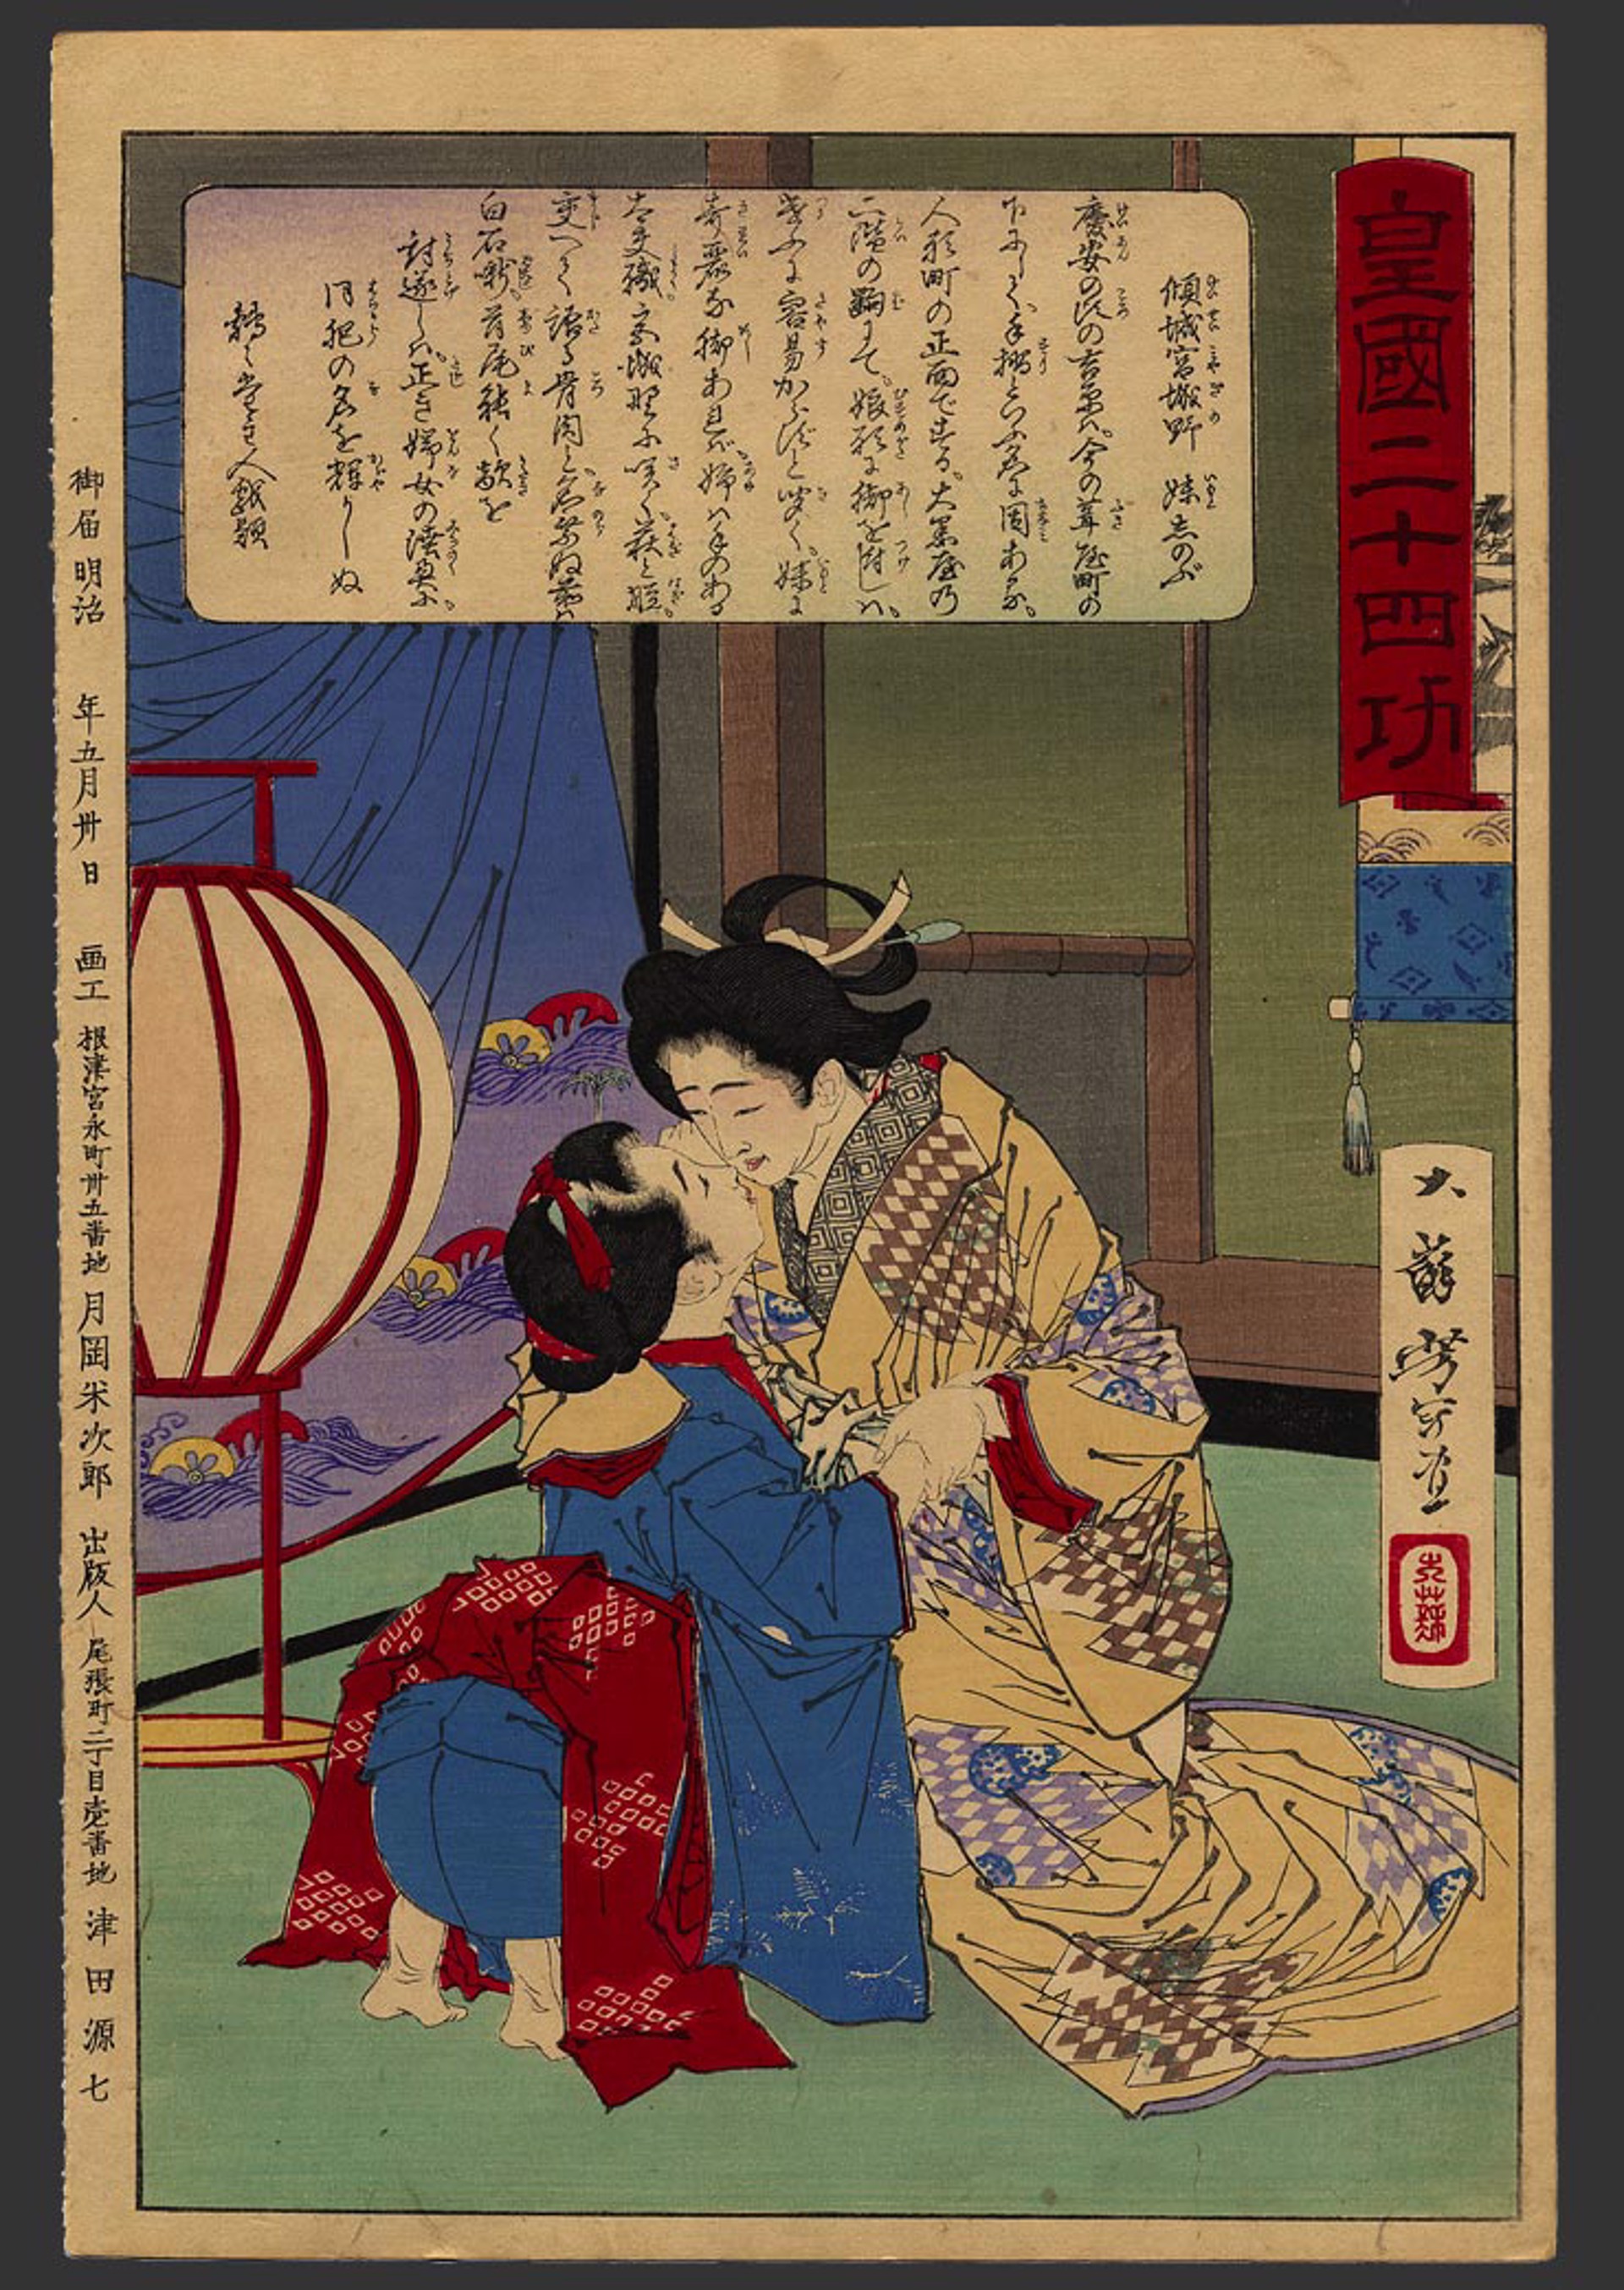 #6 Miyagino and her sister Shinobu plot to avenge their father 24 Accomplishments in Imperial Japan by Yoshitoshi